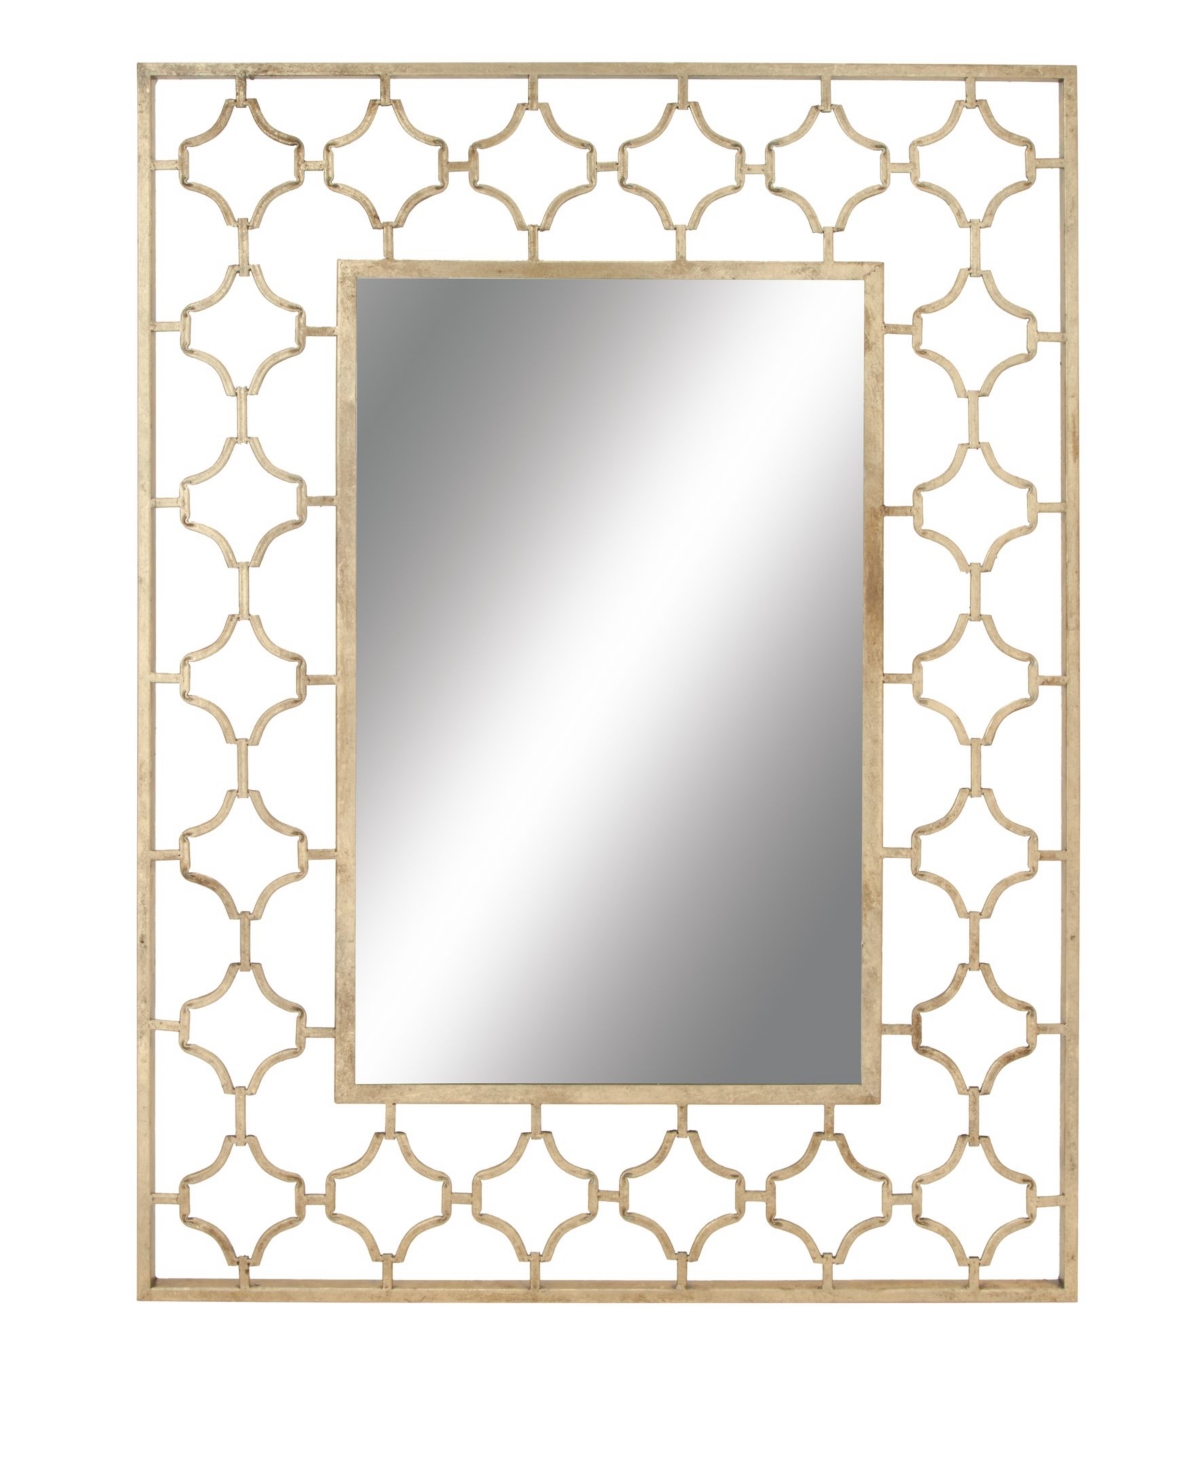 Glam Metal Wall Mirror, 50" x 38" - Gold-Tone